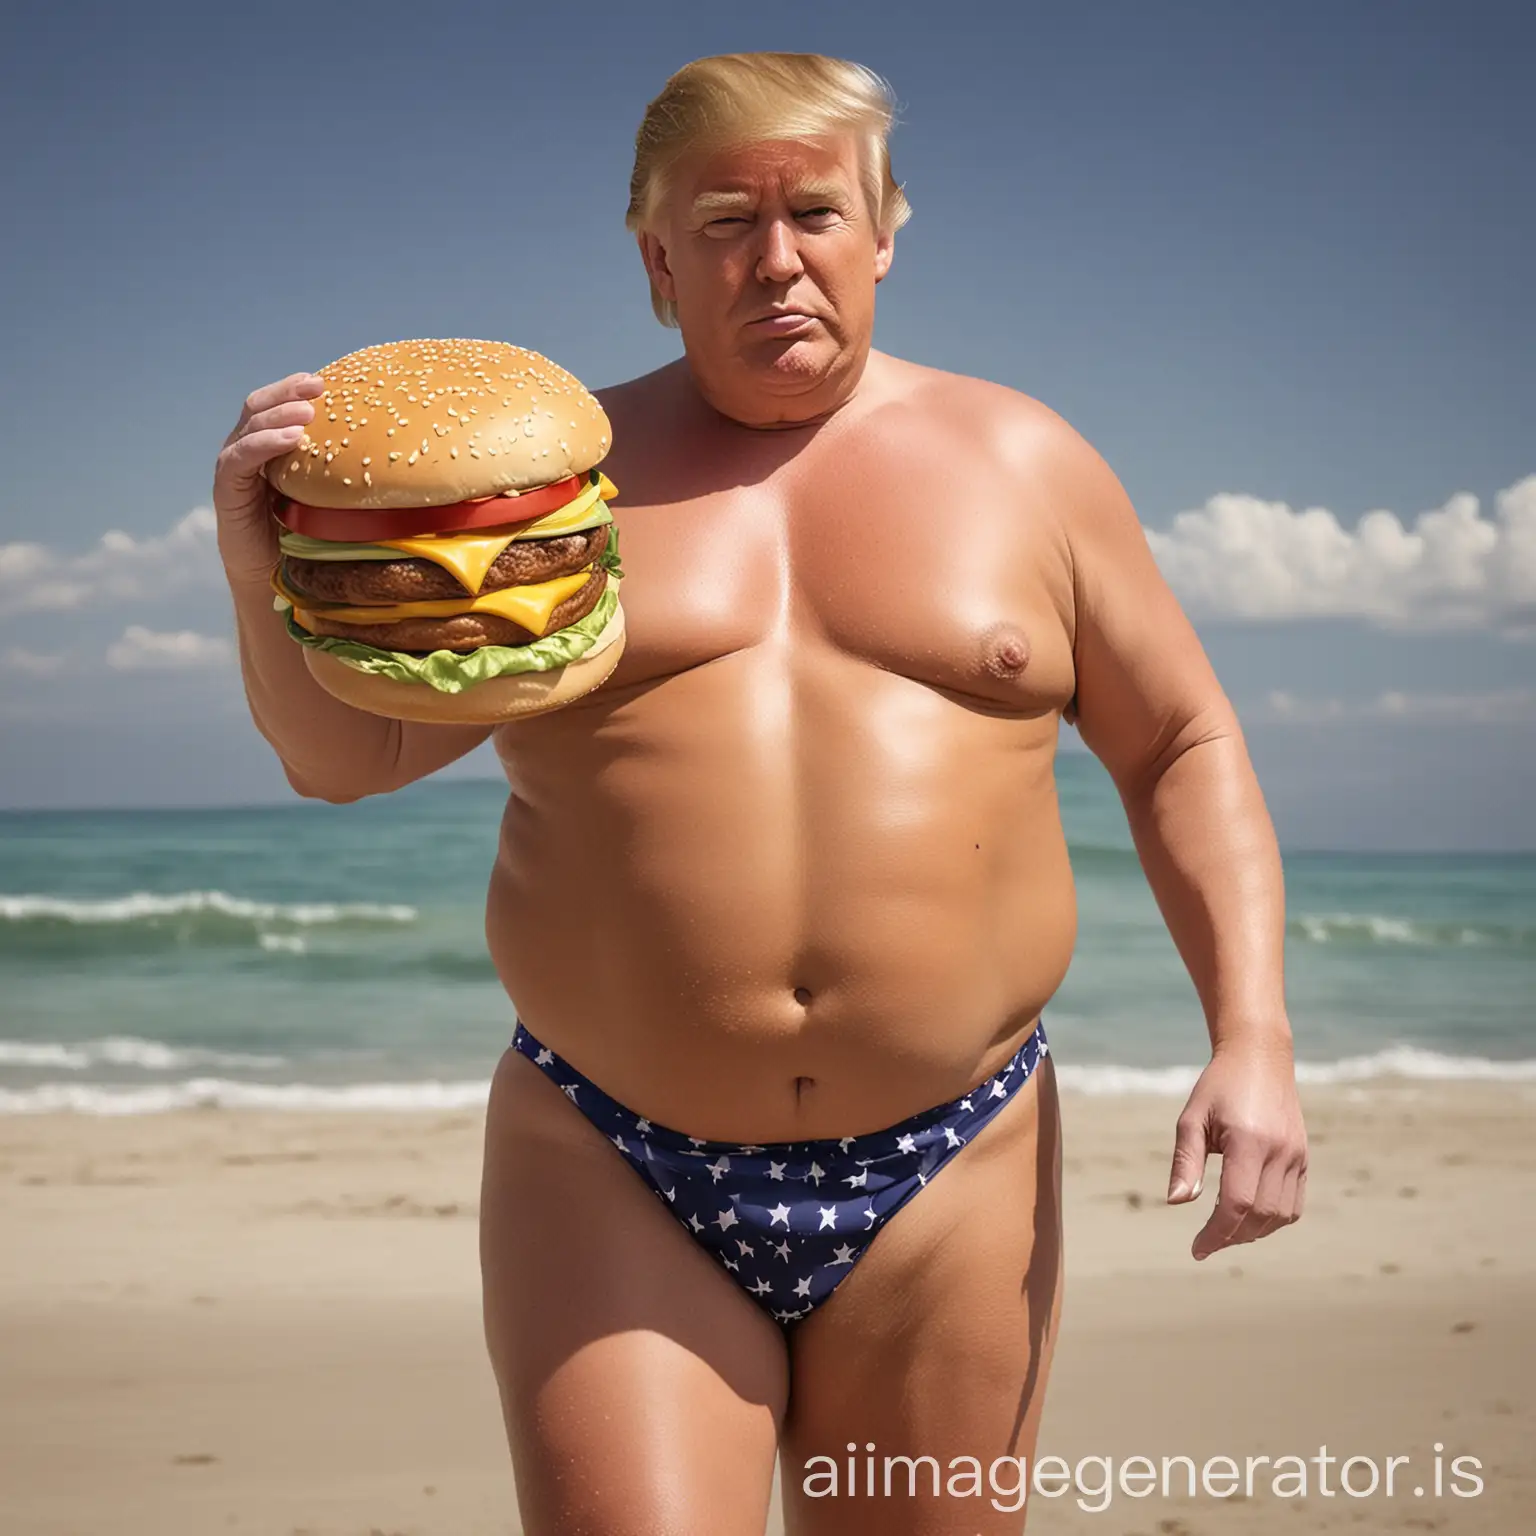 Donald-Trump-in-Swimwear-Enjoying-a-McDonalds-Cheeseburger